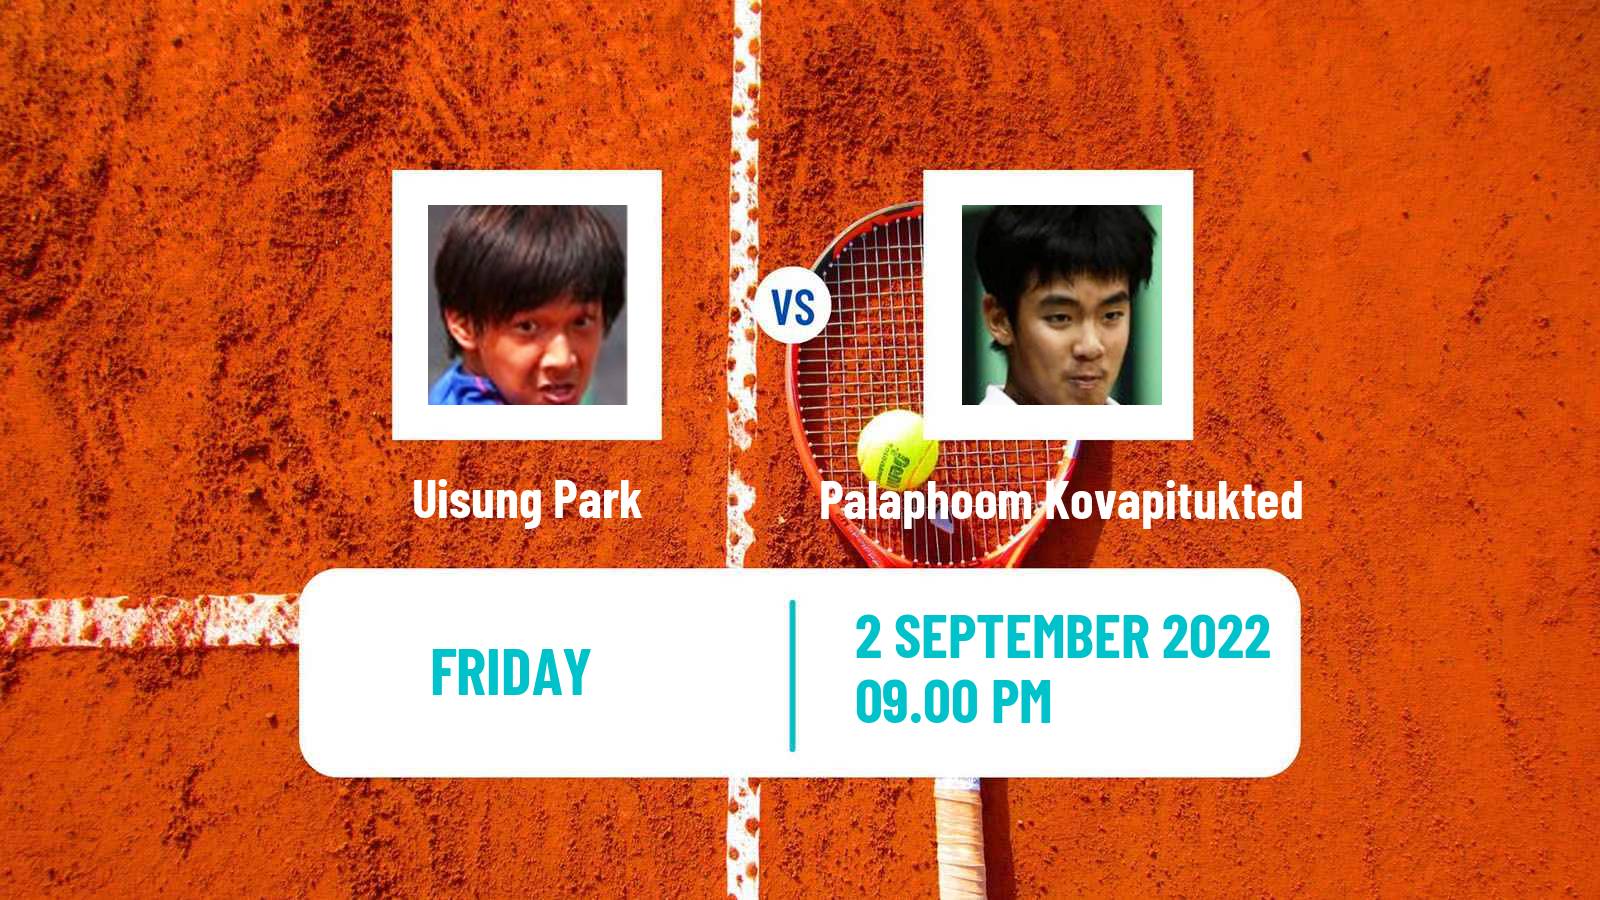 Tennis ITF Tournaments Uisung Park - Palaphoom Kovapitukted